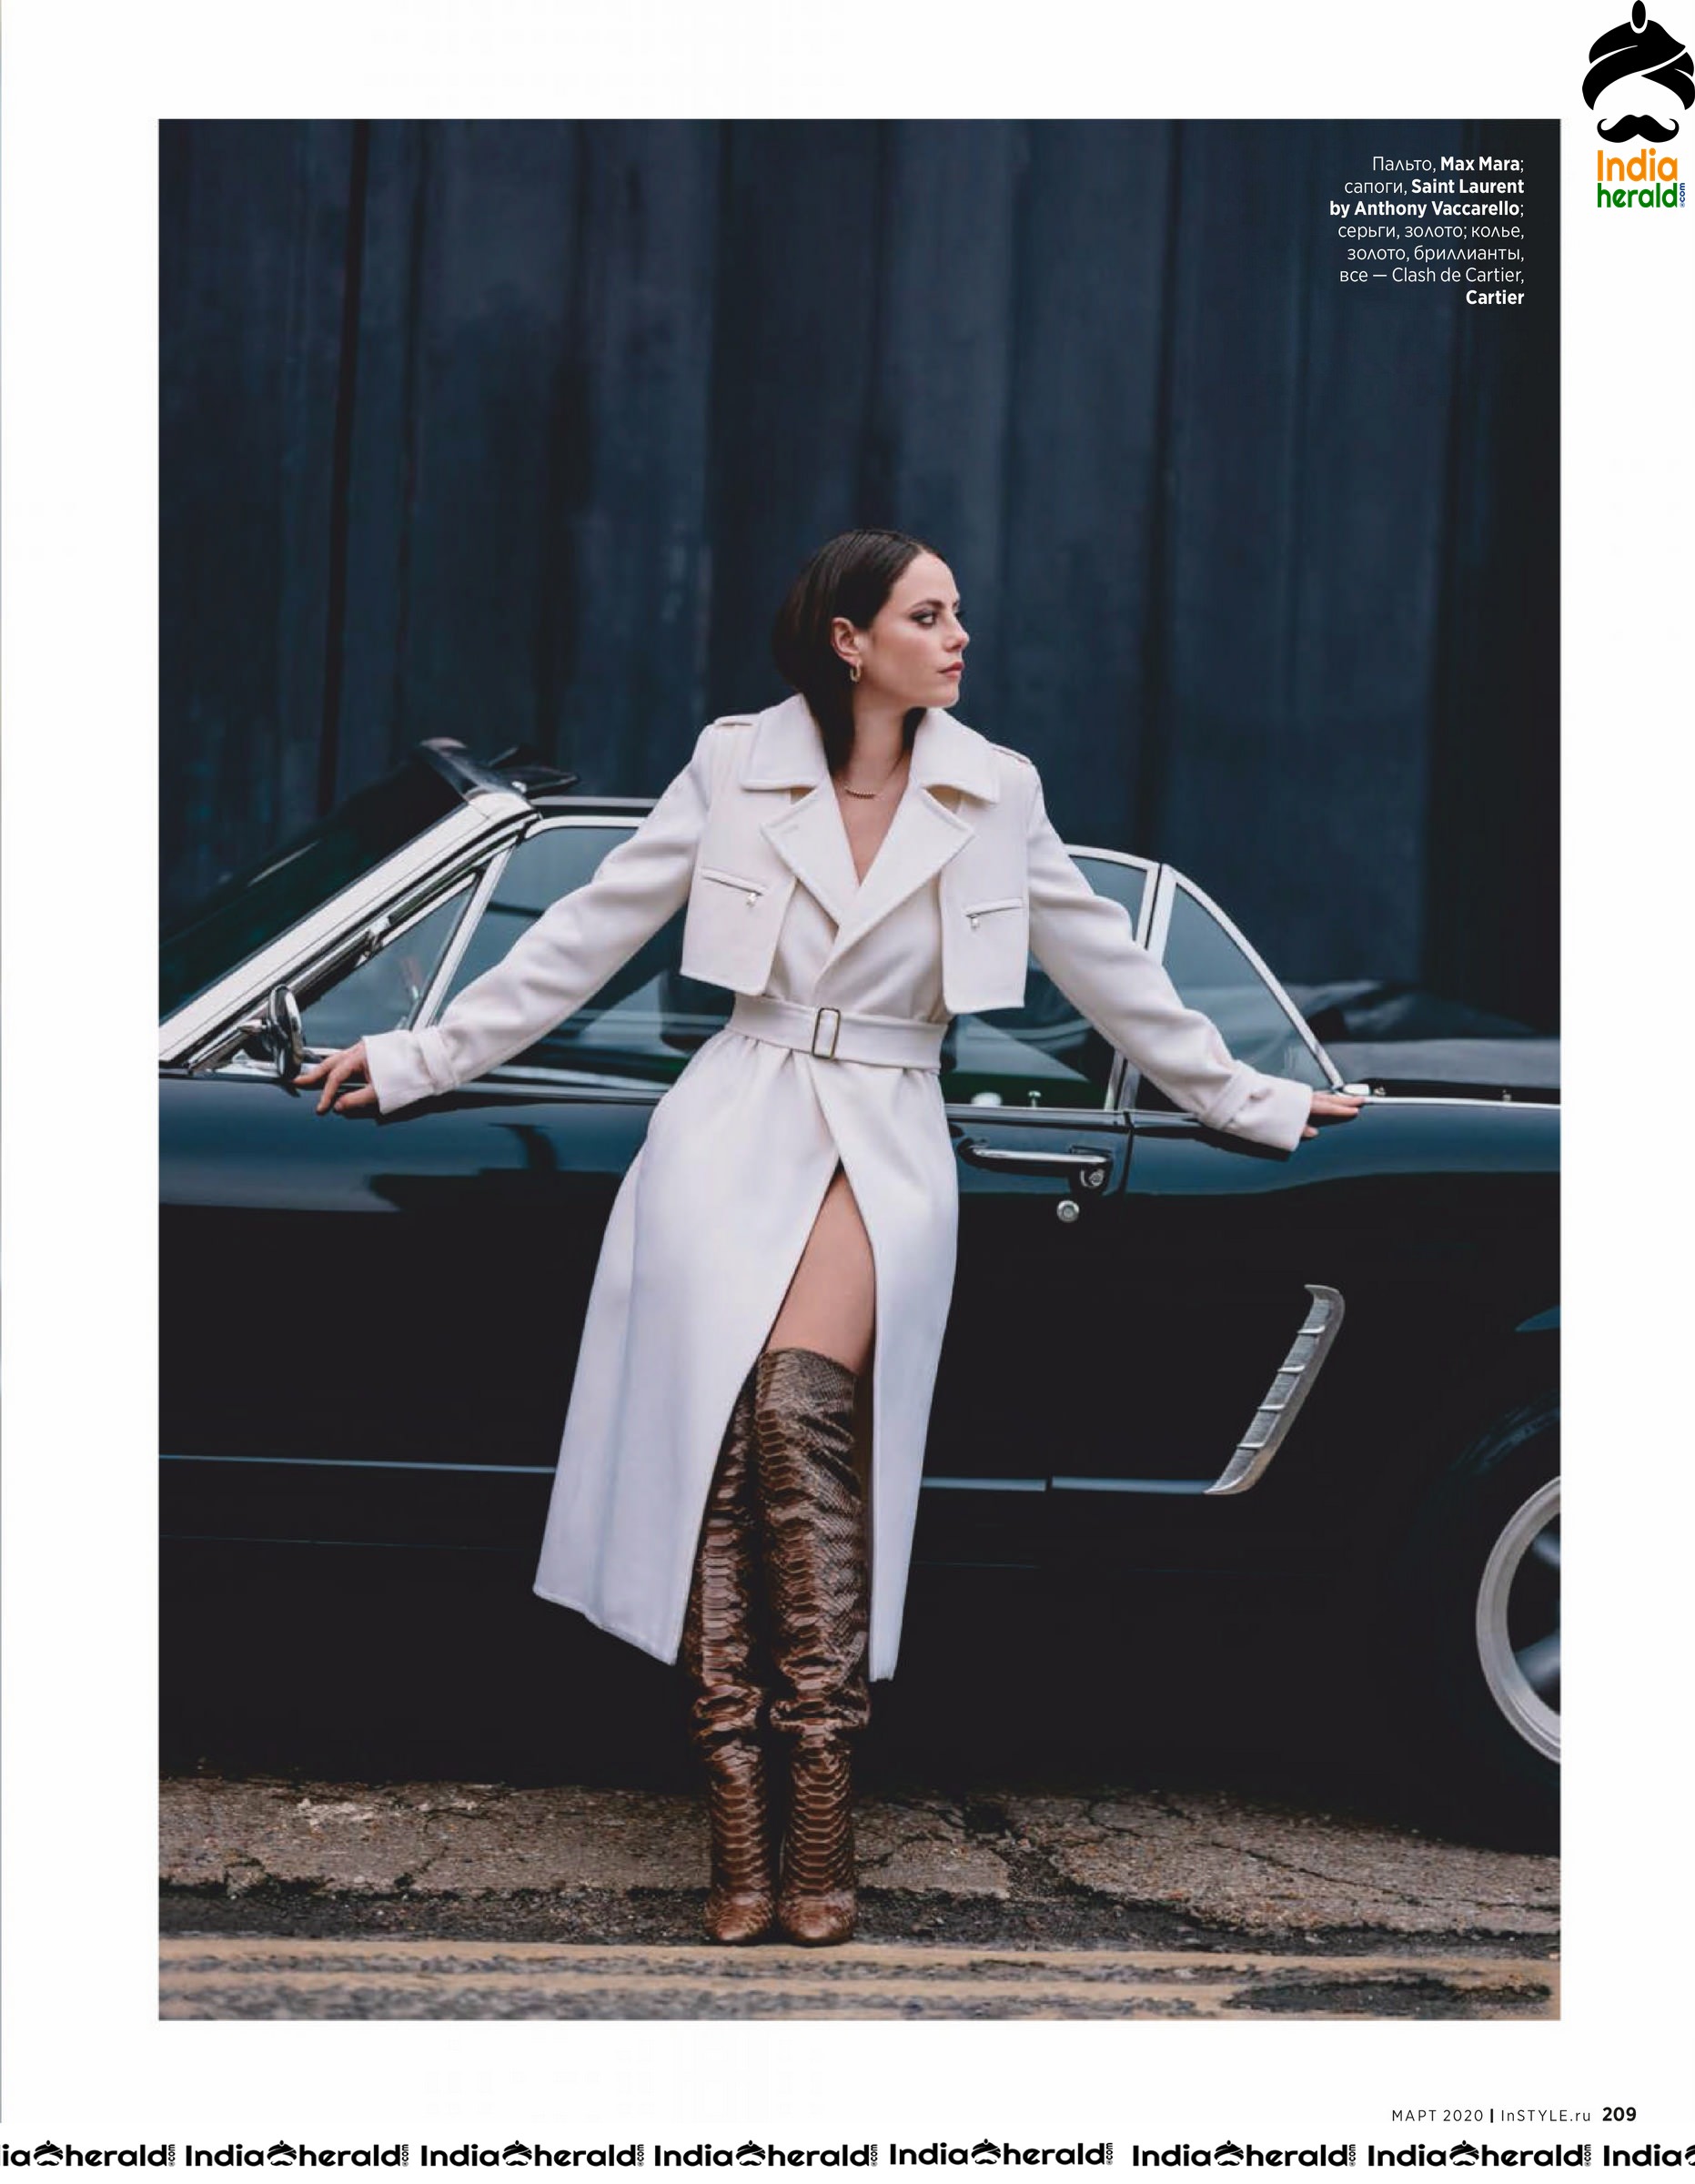 Kaya Scodelario Poses for InStyle Magazine Russia Edition